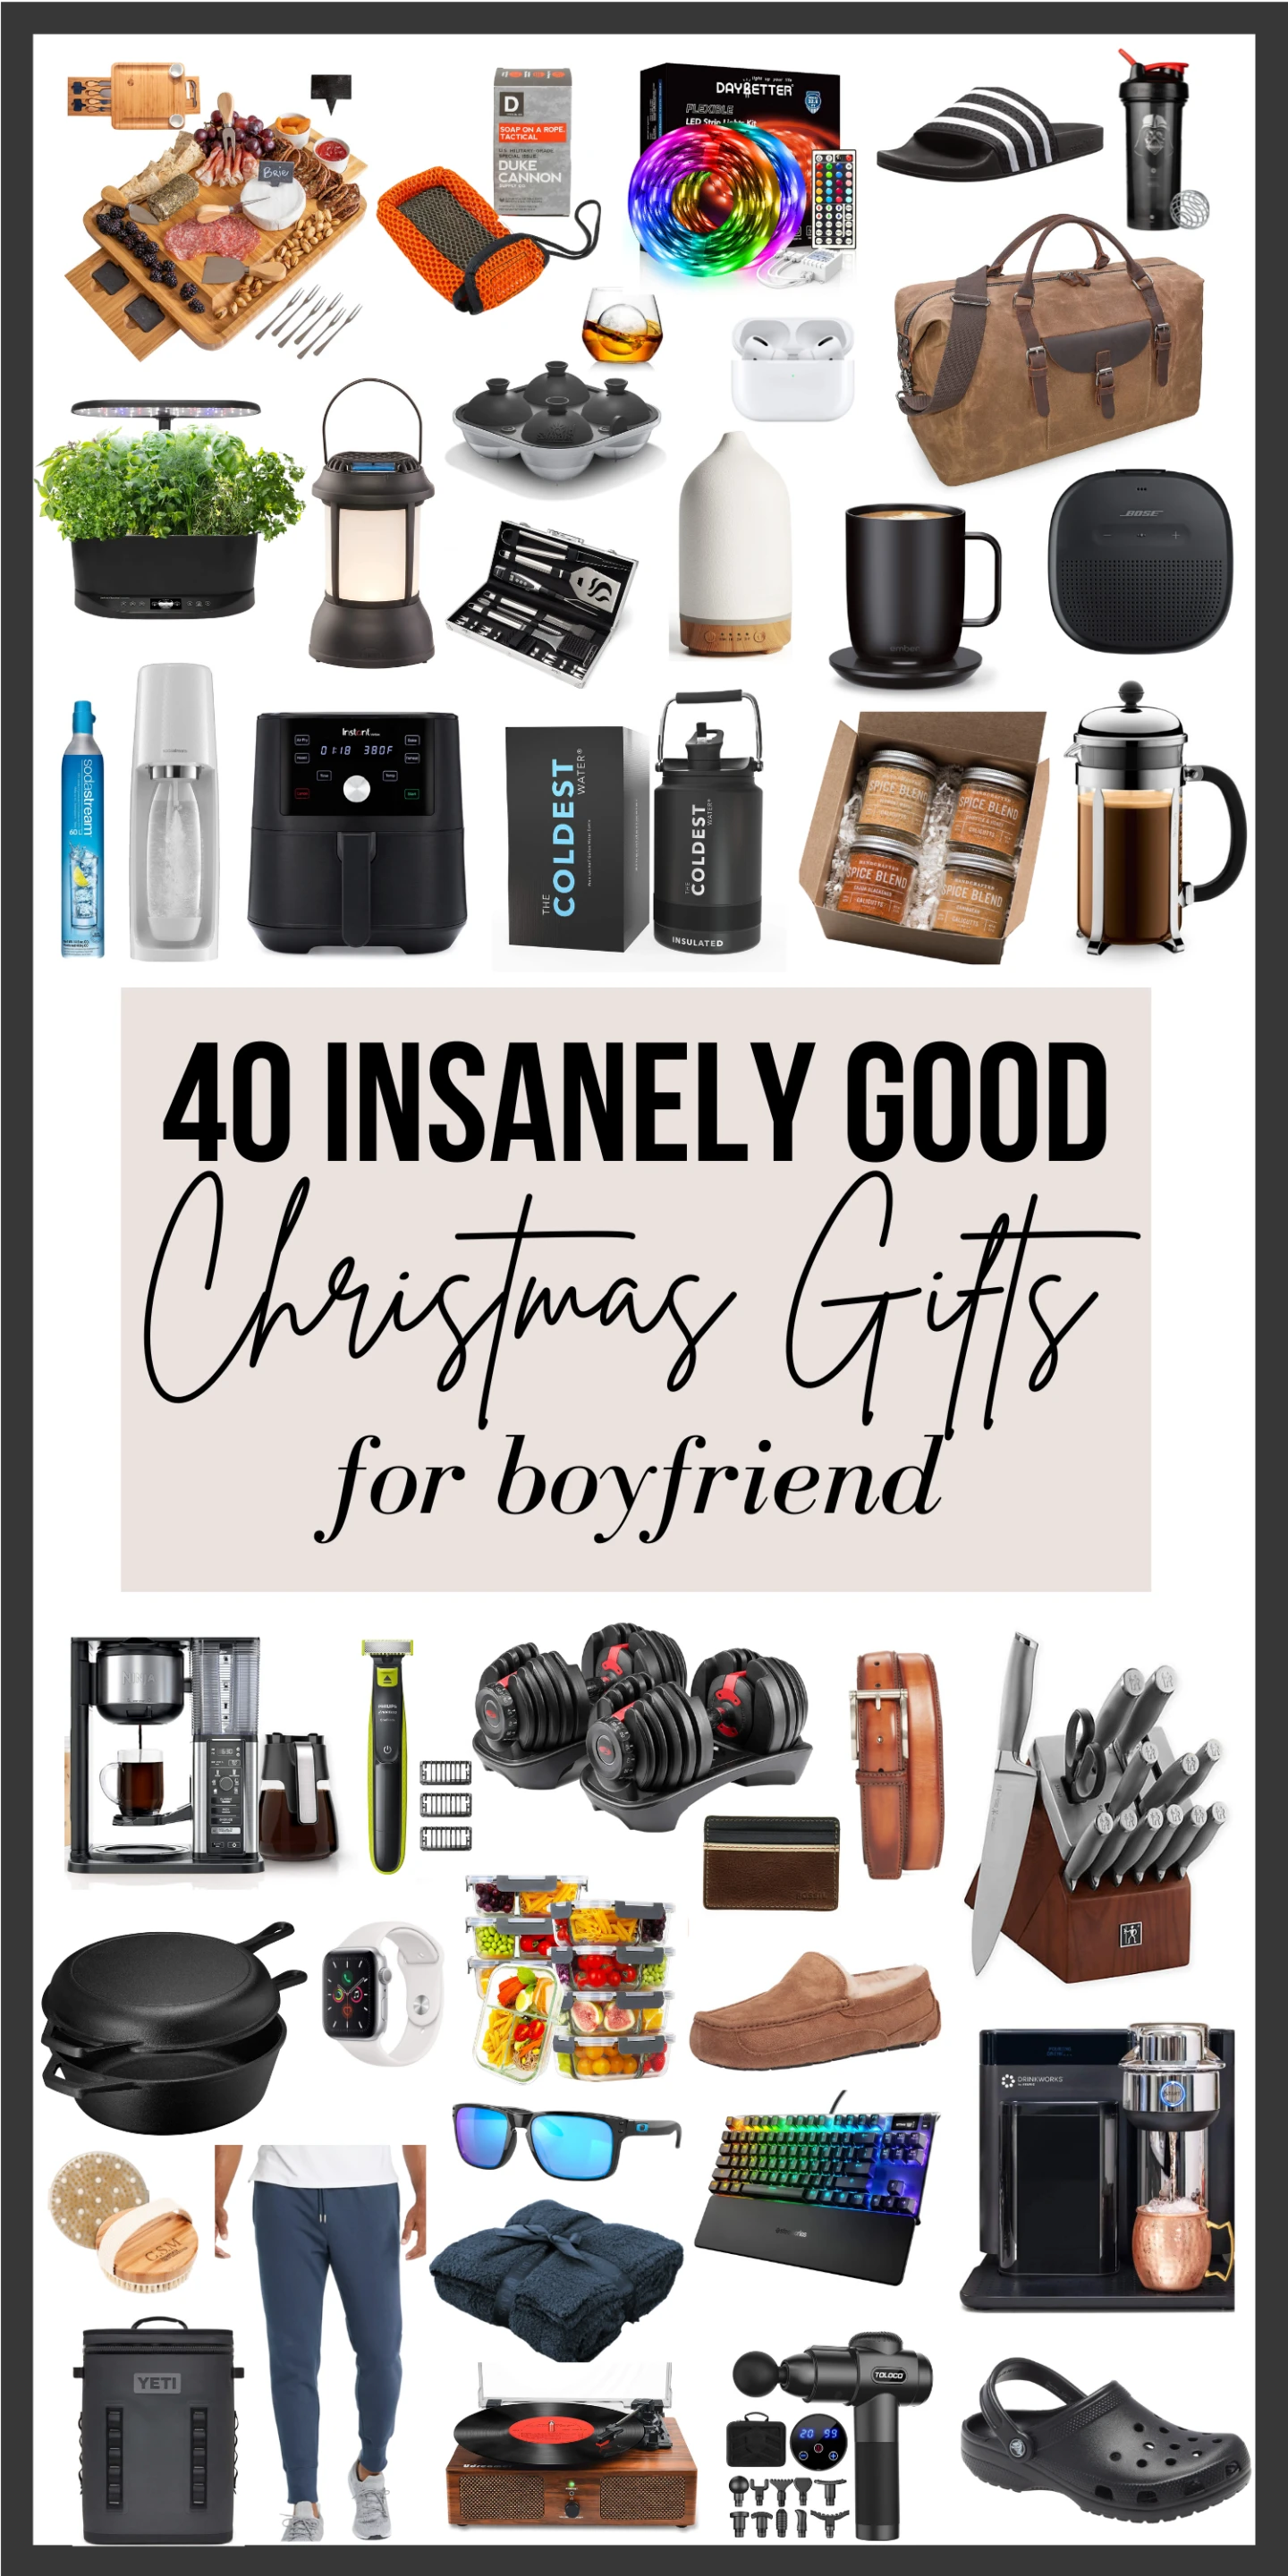 48 Unique Gift For Boyfriend Ideas That He's Sure To Love